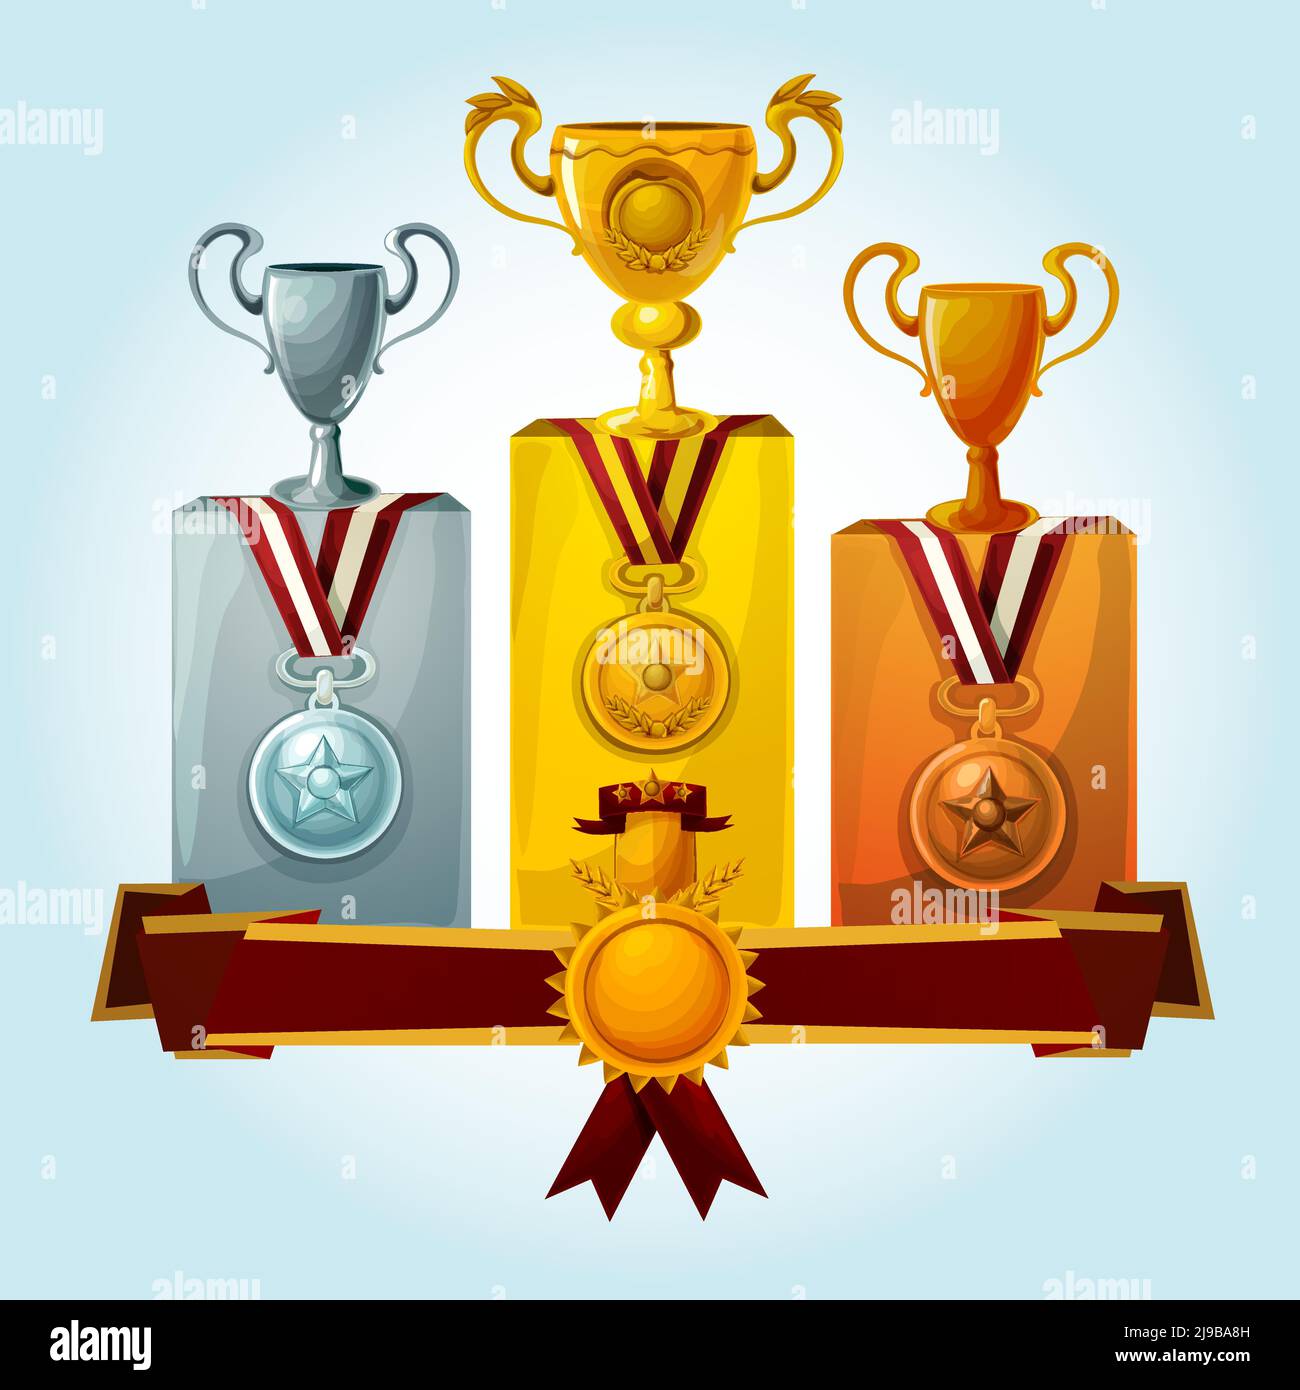 Goldene Pokale und Medaillengewinner auf Podium Cartoon-Vektor Abbildung Stock Vektor